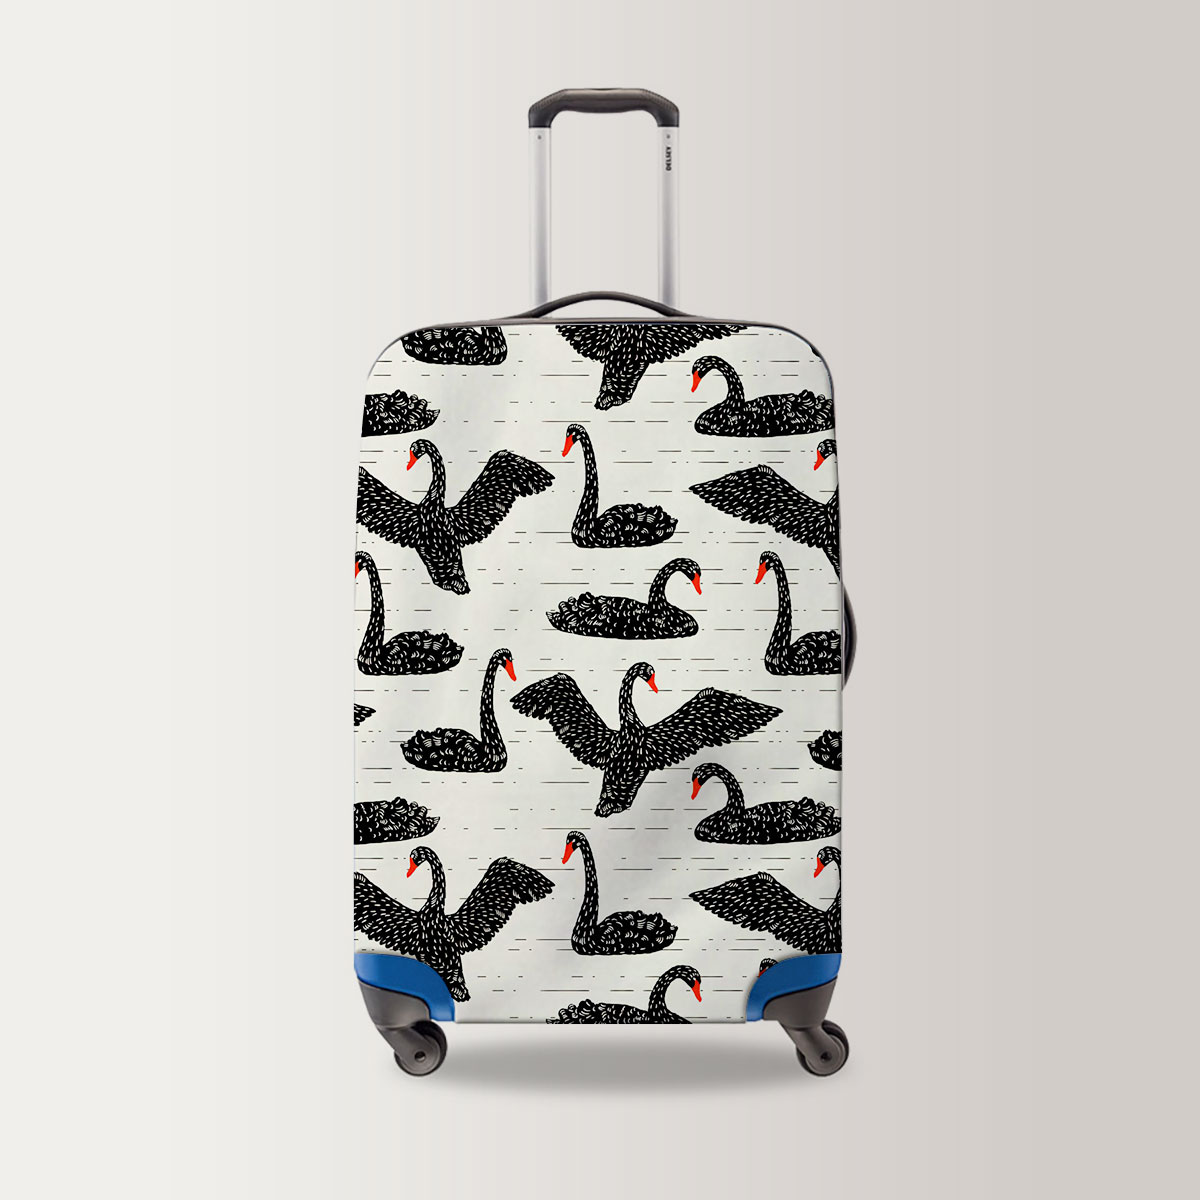 Black Swan Art Luggage Bag